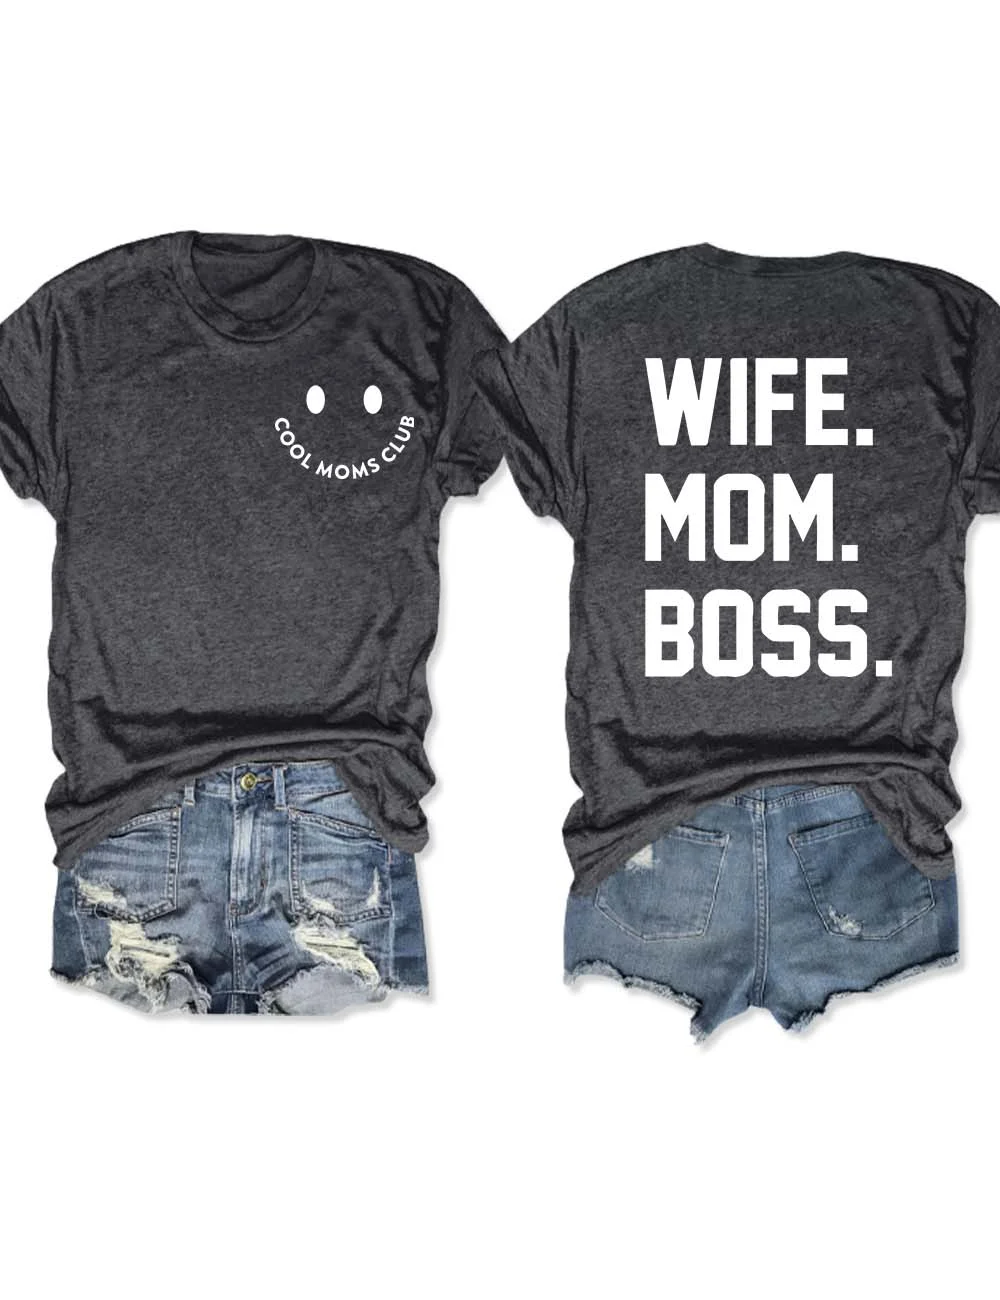 Wife Mom Boss T-Shirt